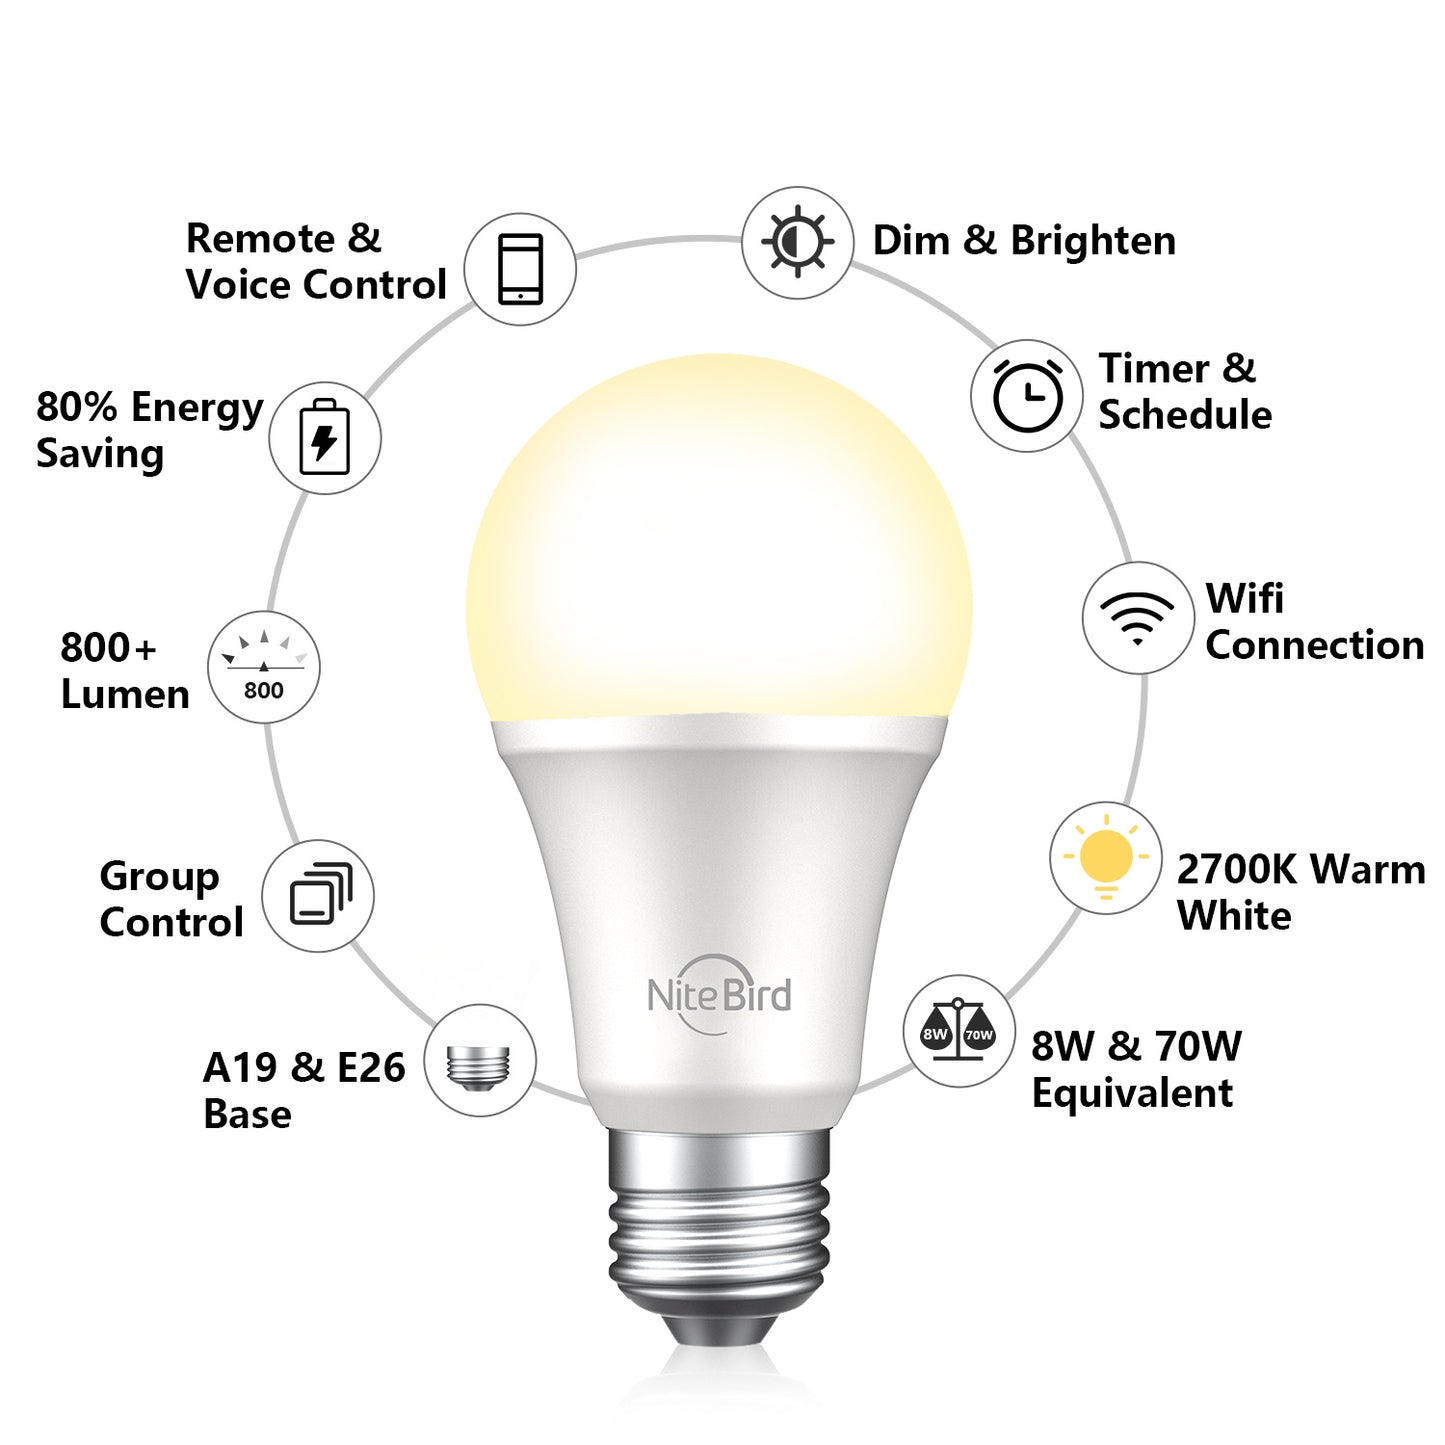 NiteBird Smart Bulb LB1-2-US